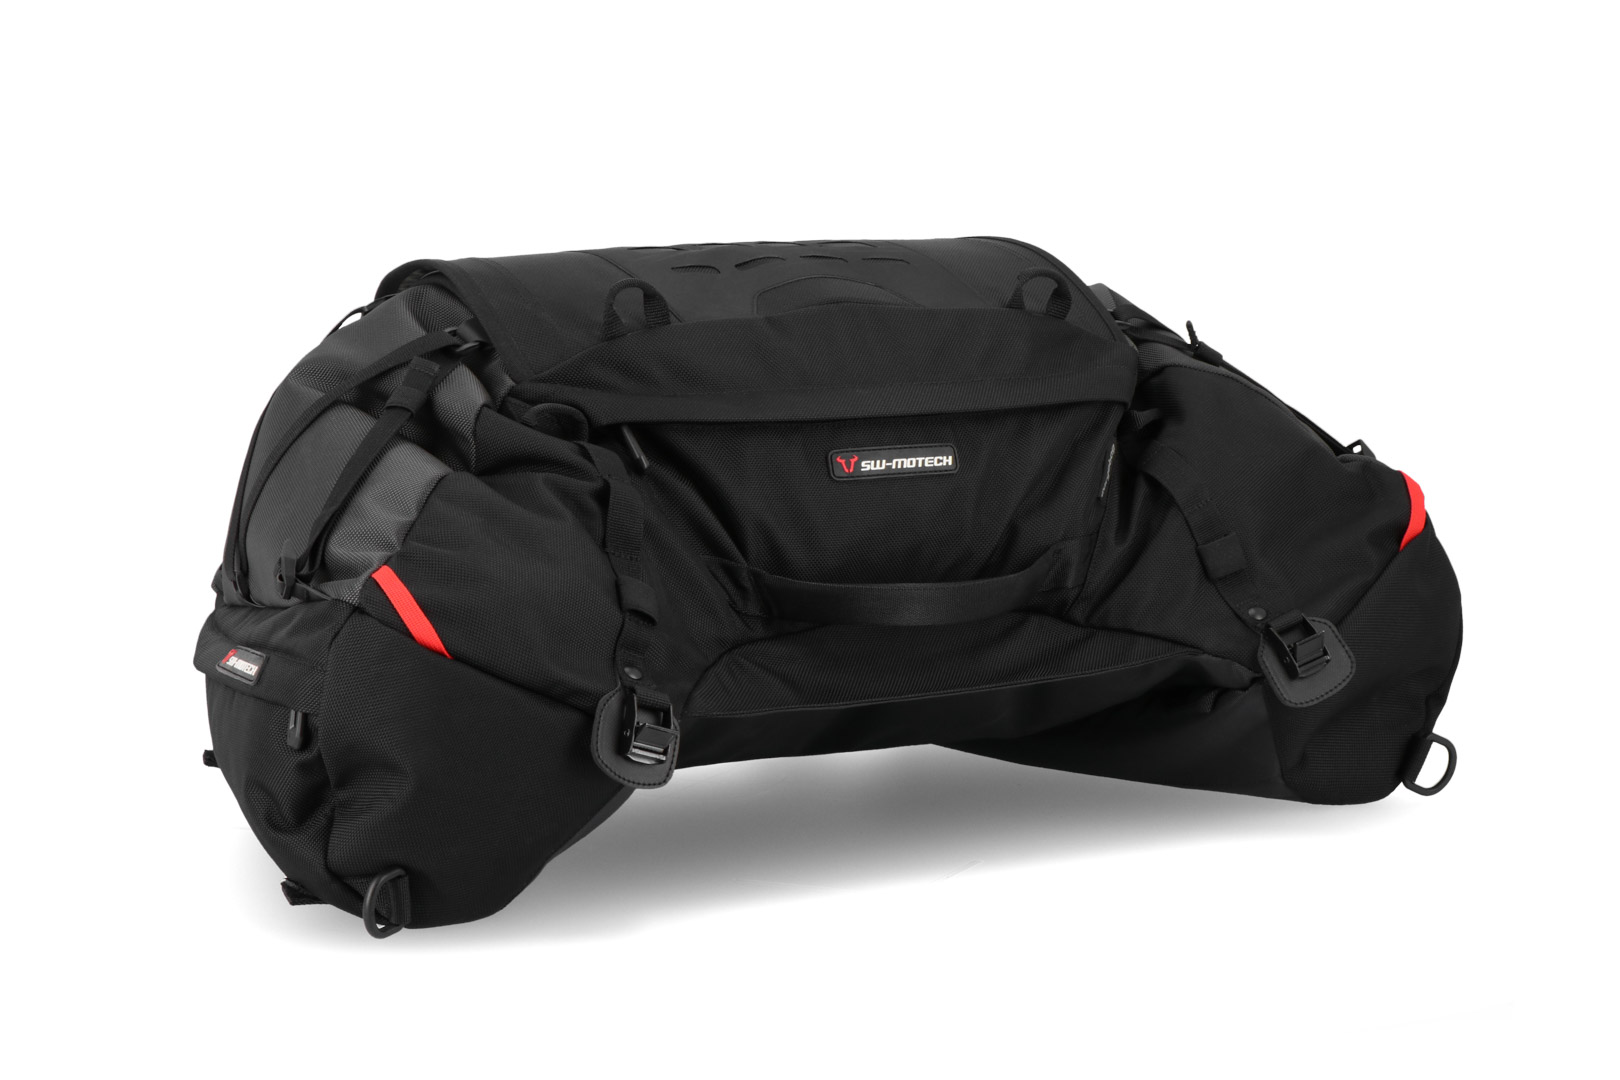 SW-Motech PRO Cargobag tail bag - 1680D Ballistic Nylon. Black/Anthracite. 50 l., black